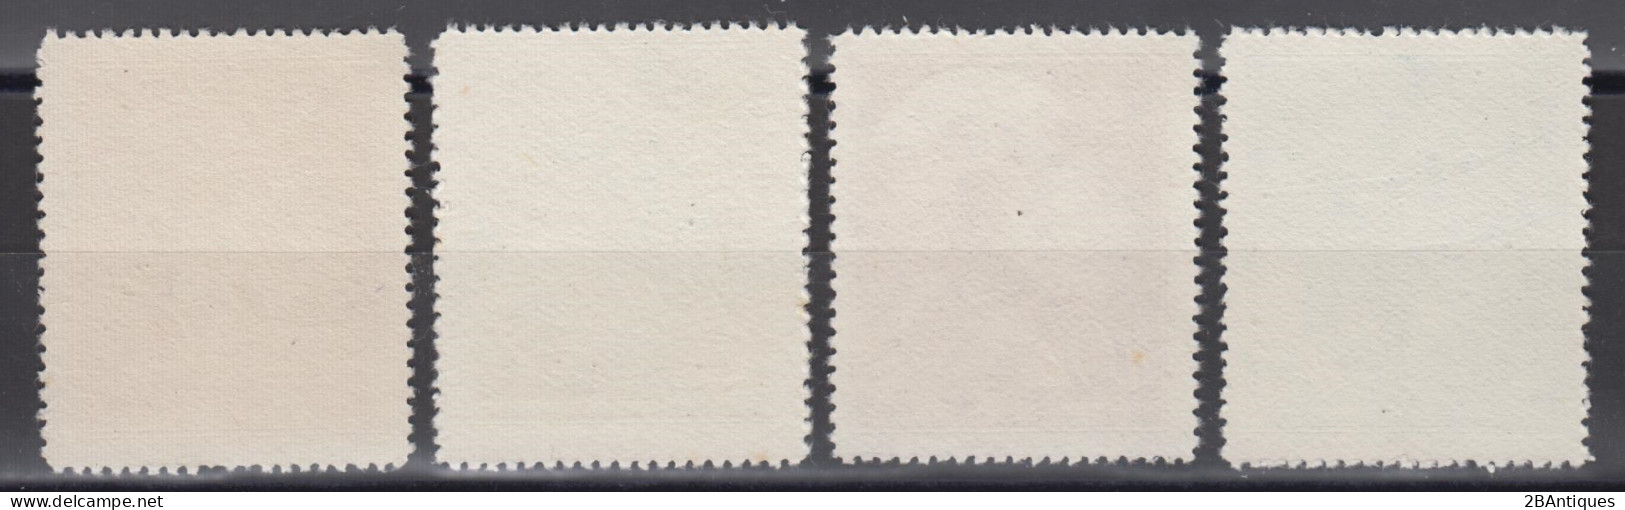 PR CHINA 1958 - Aviation Sports MNH** XF - Unused Stamps